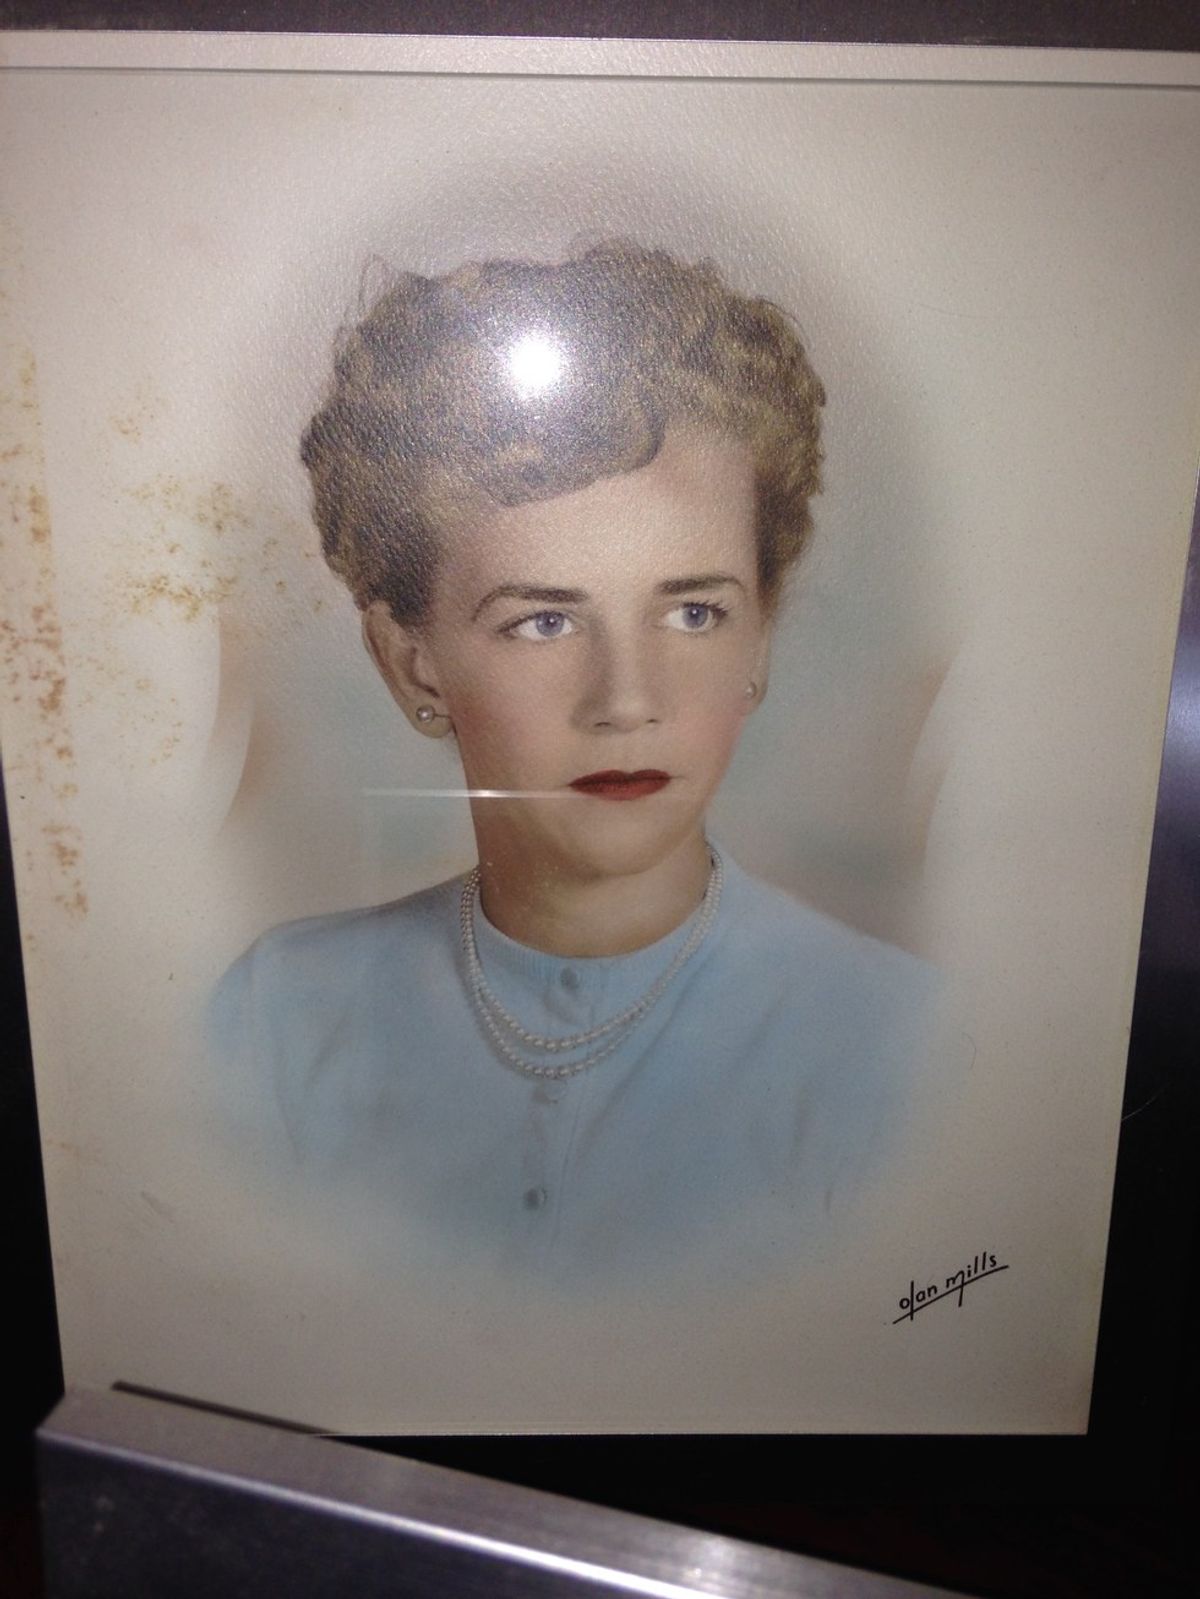 Missing My Beautiful Grandmother